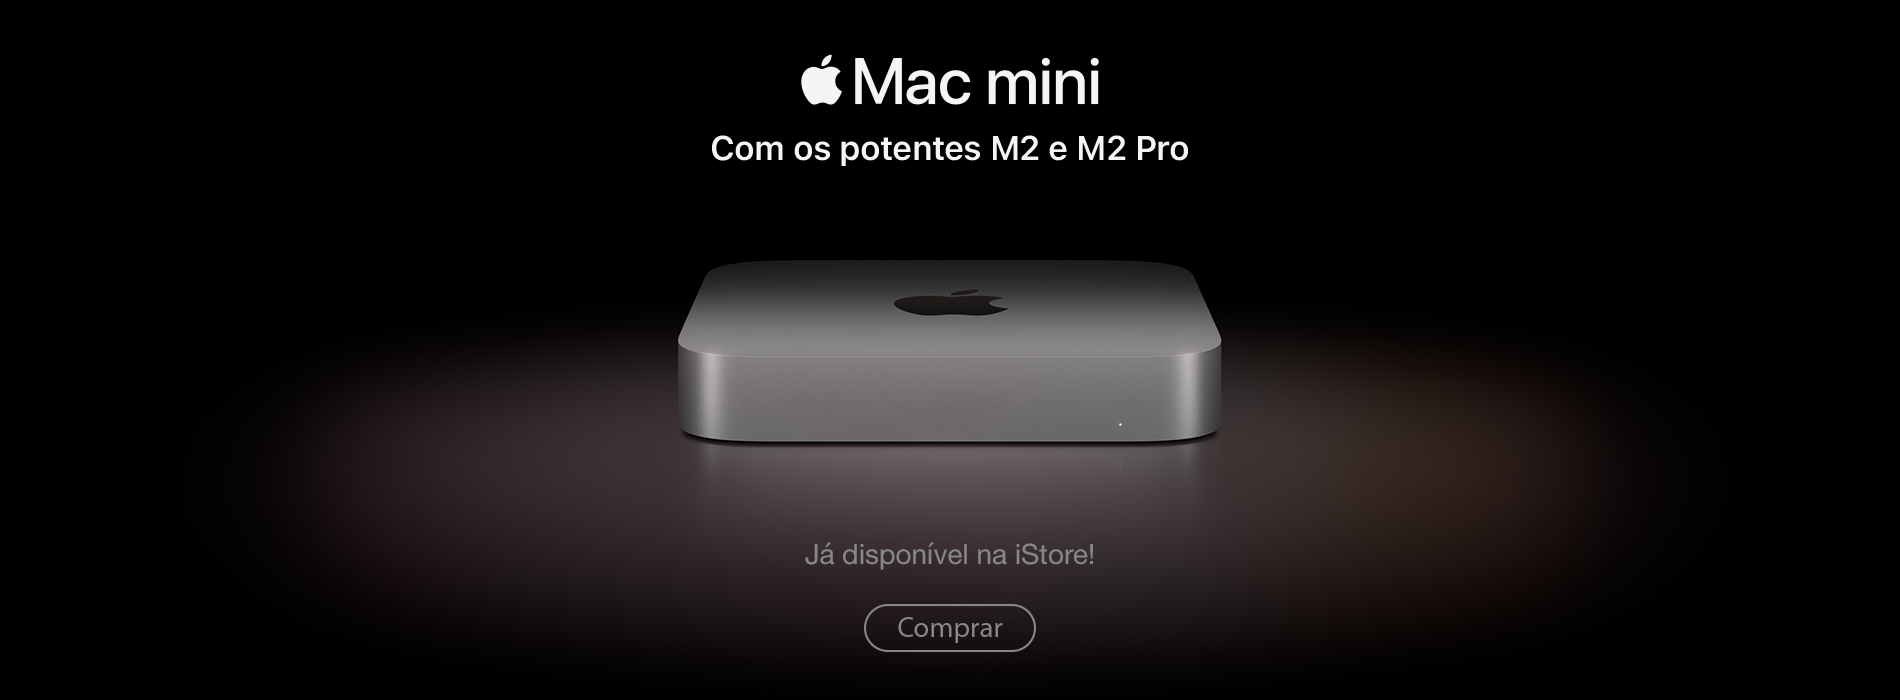 Mac mini - Disponível